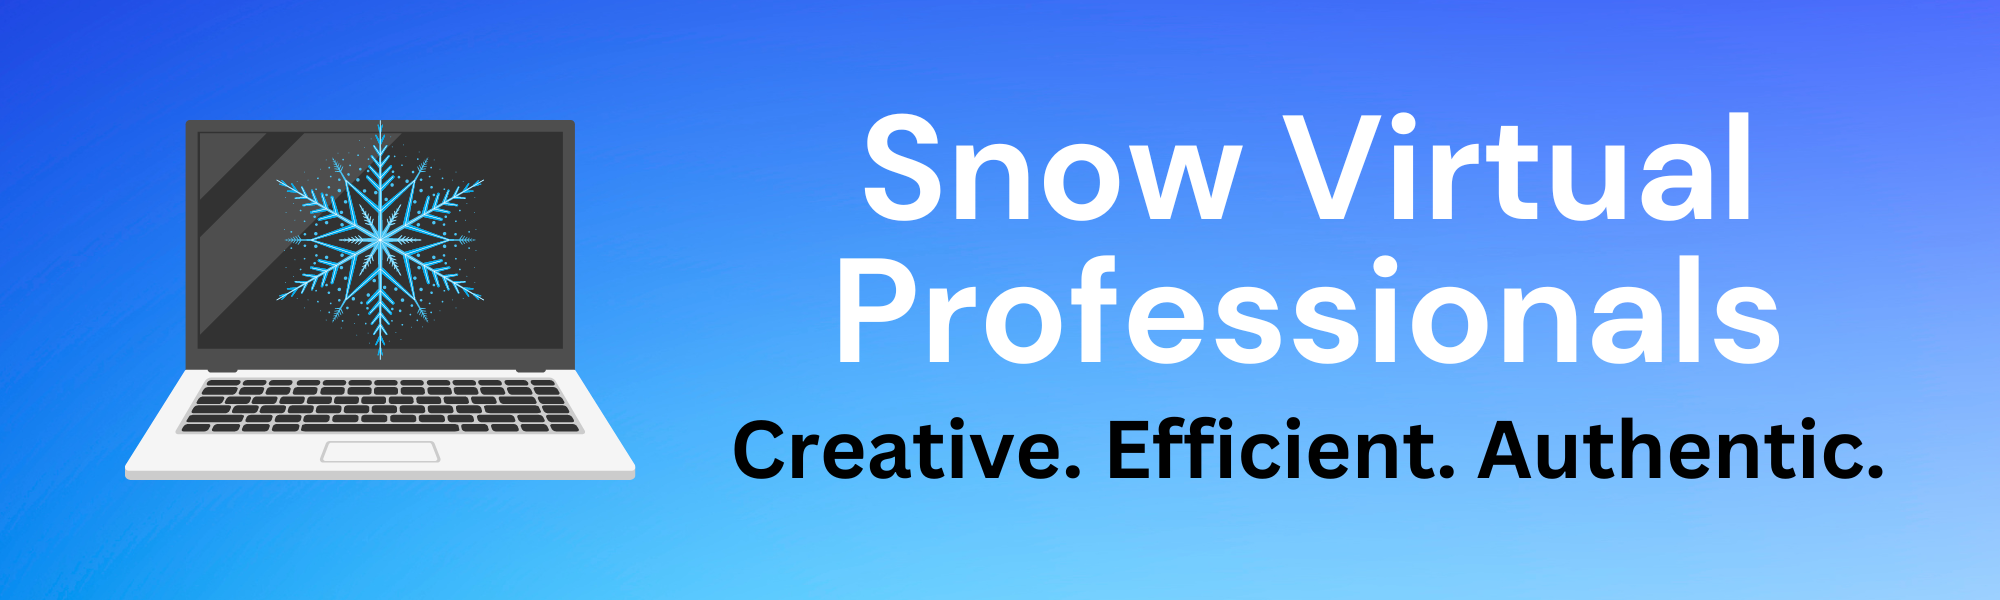 Snow Virtual Professionals